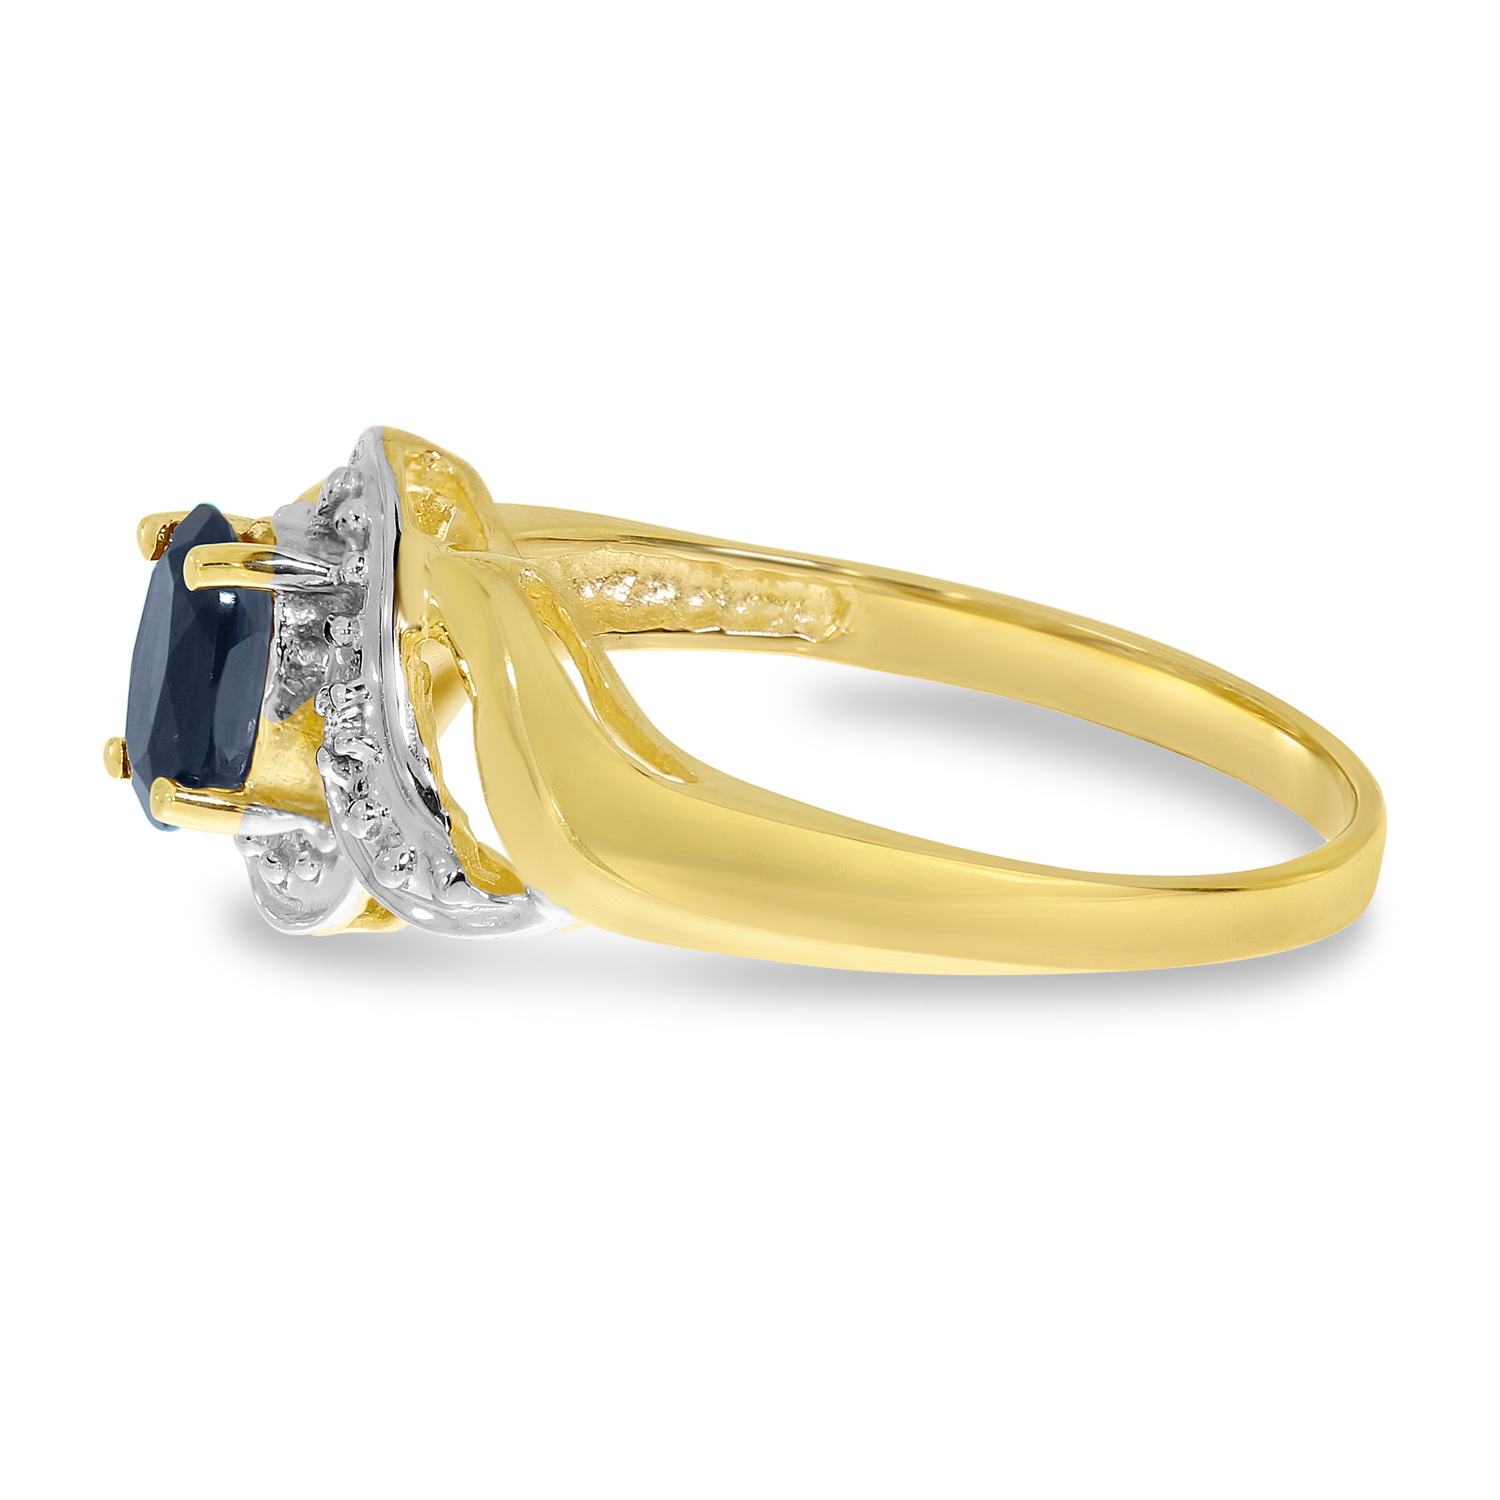 Direct-Jewelry 10k Yellow Gold Oval Sapphire And Diamond Swirl Ring